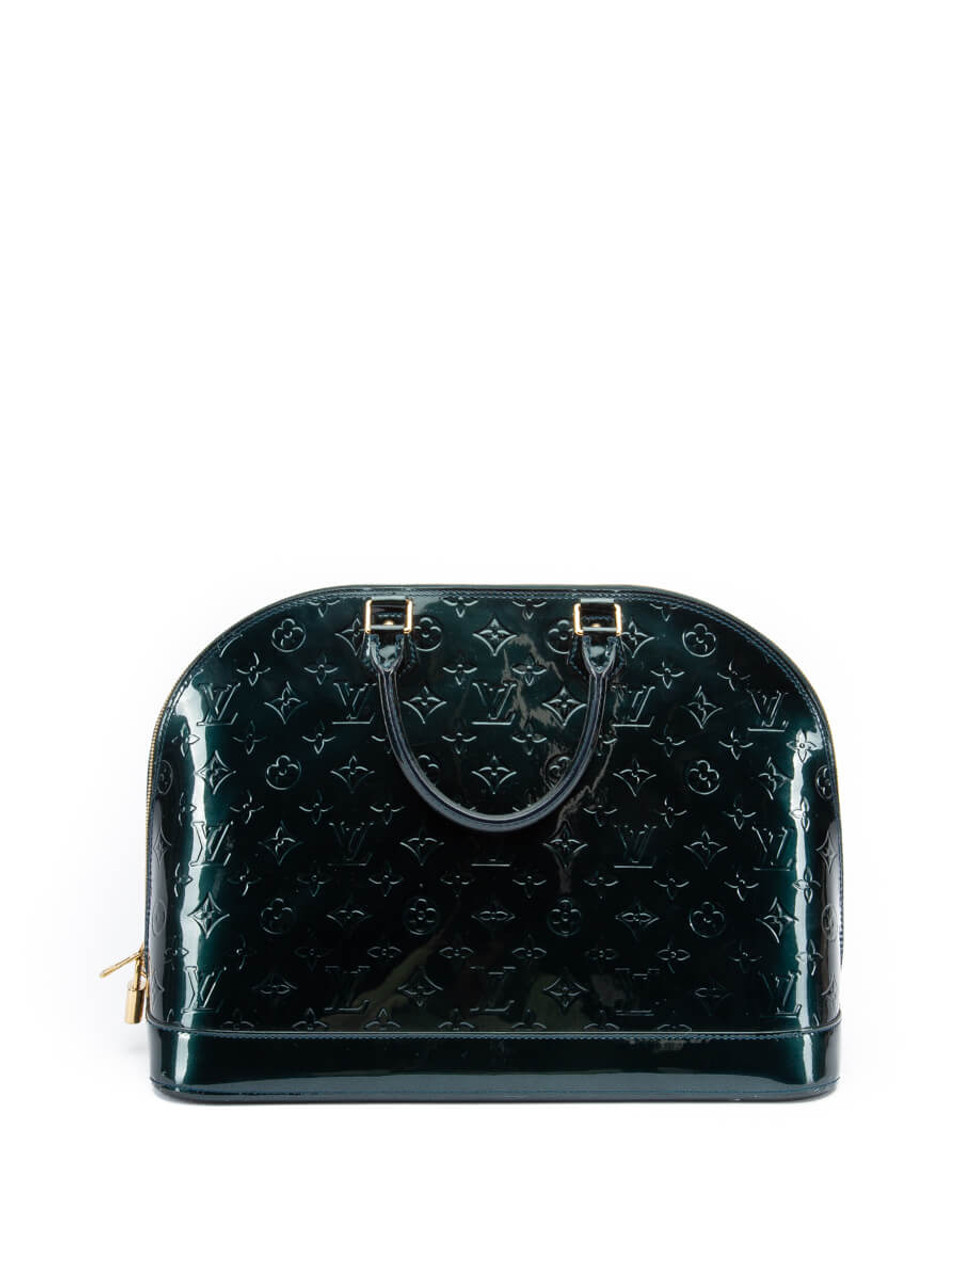 Louis Vuitton Alma Handbag Green Patent Leather